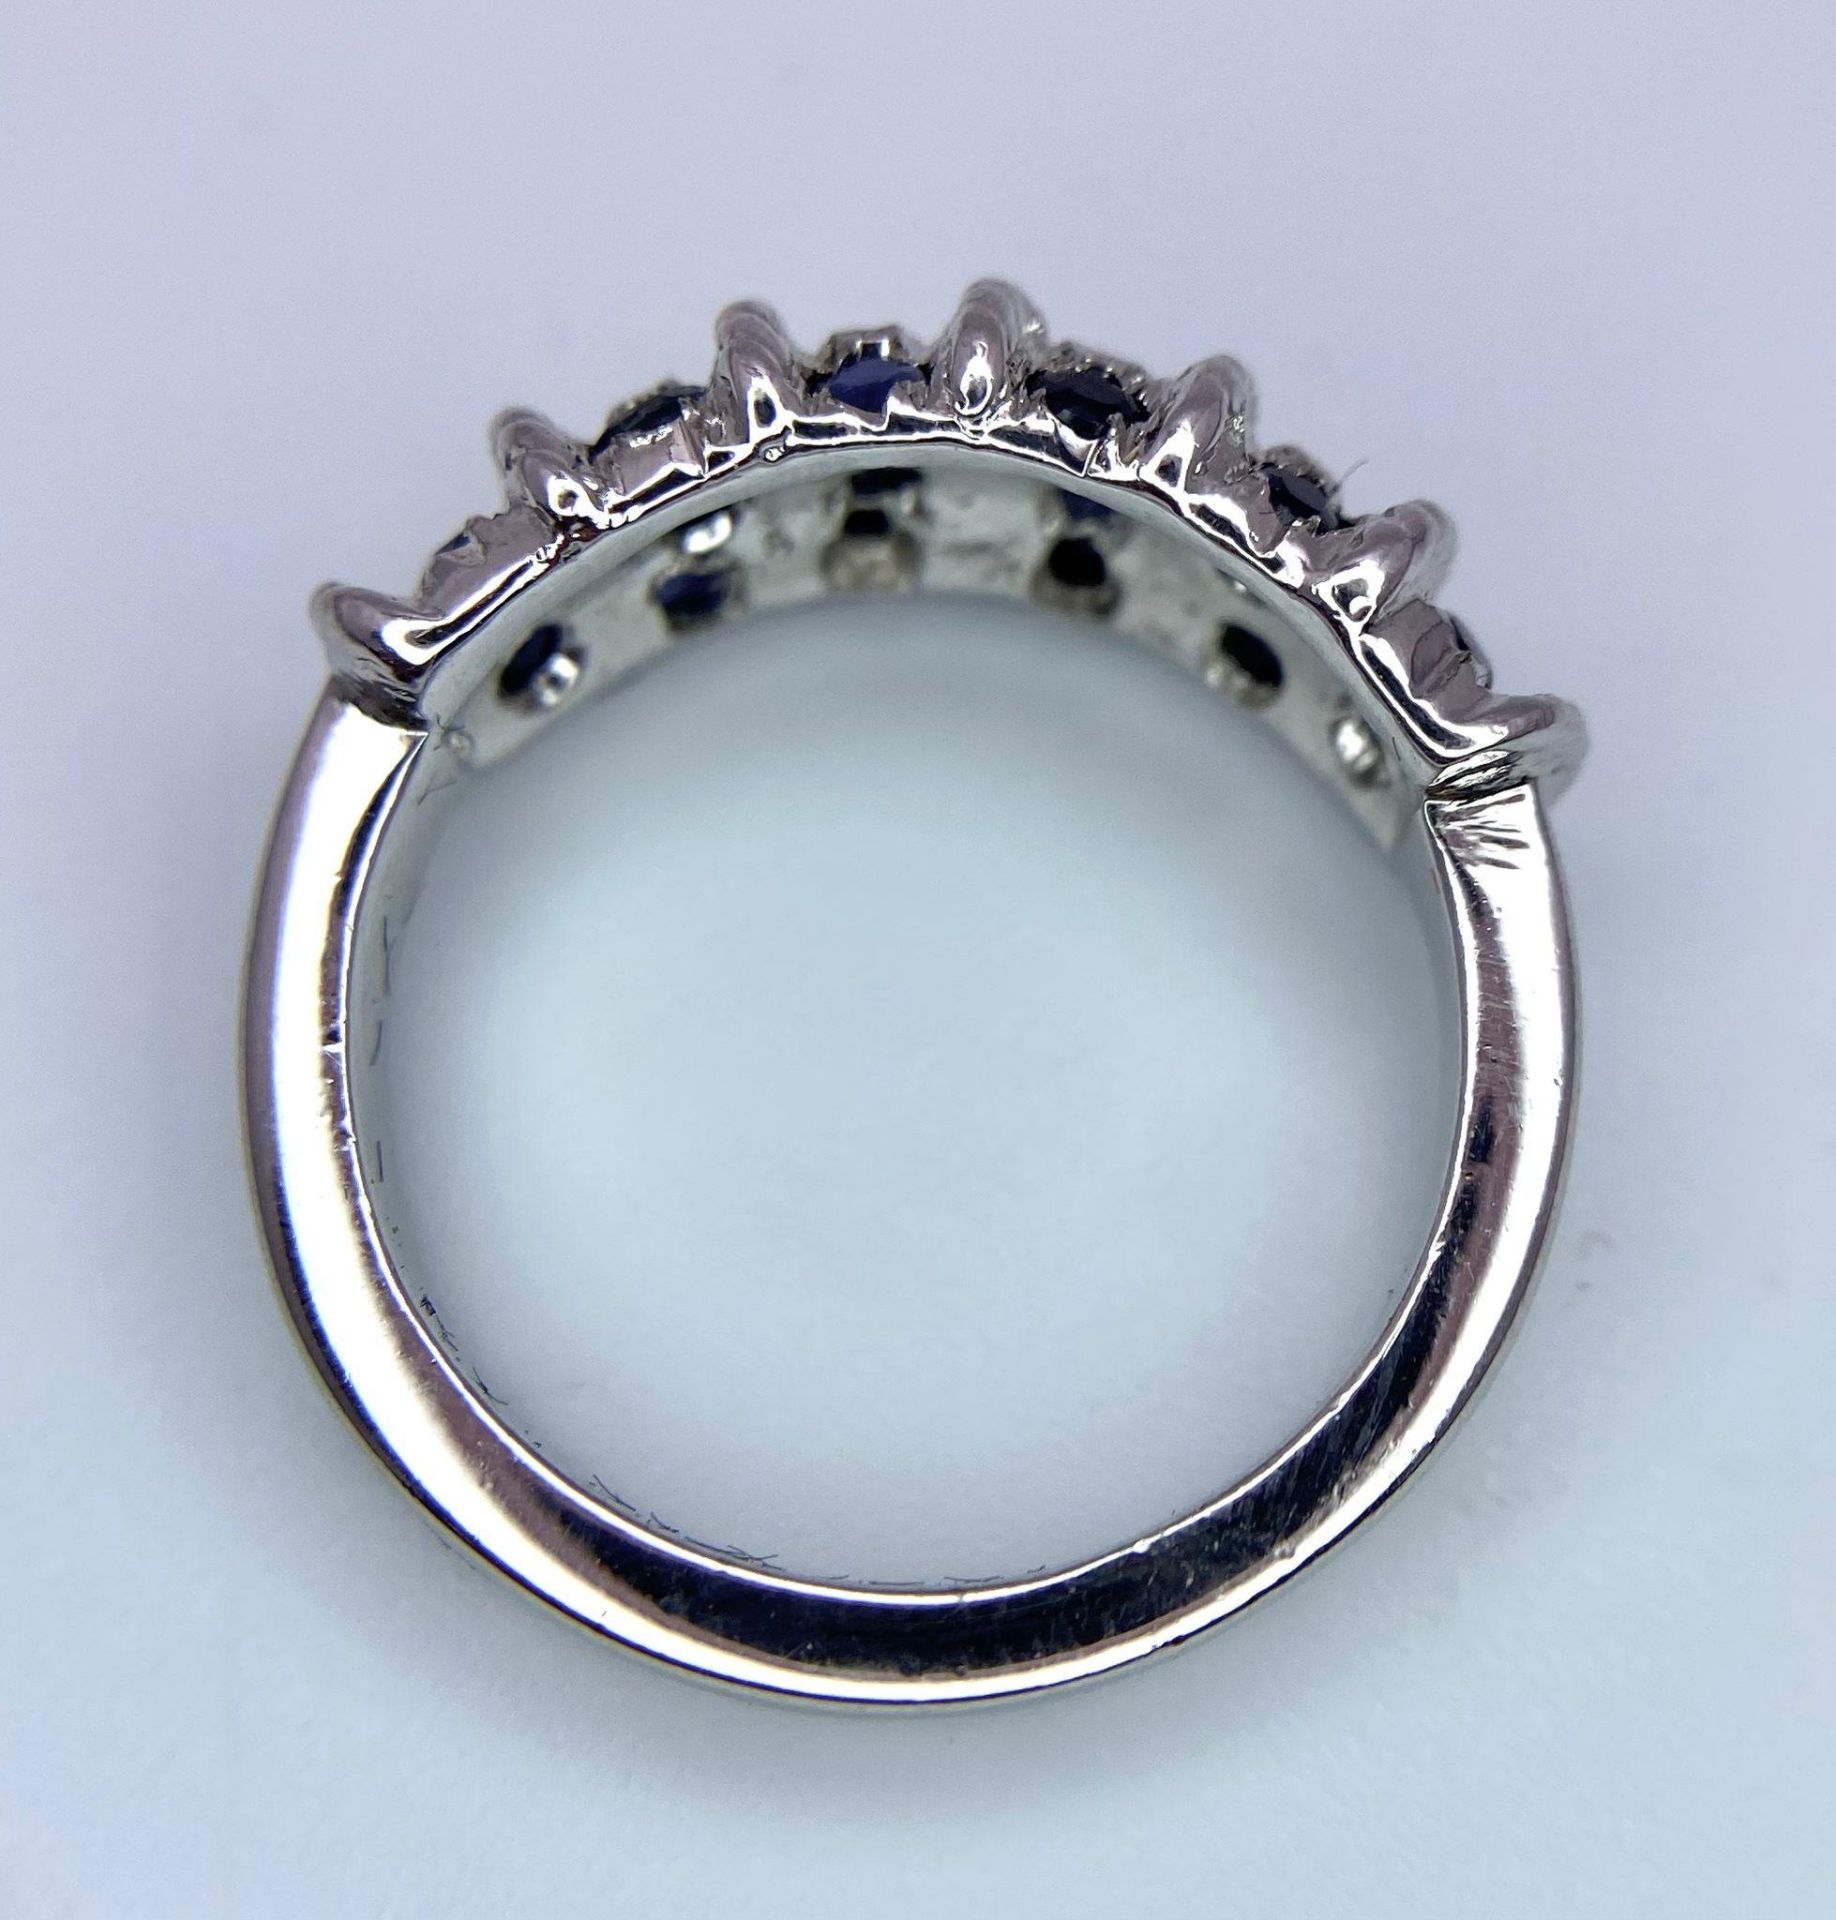 A Graduating Vertical Band Sapphire 925 Silver Ring. Sapphires - 2ctw. 4.77g total weight. Size M. - Bild 3 aus 5